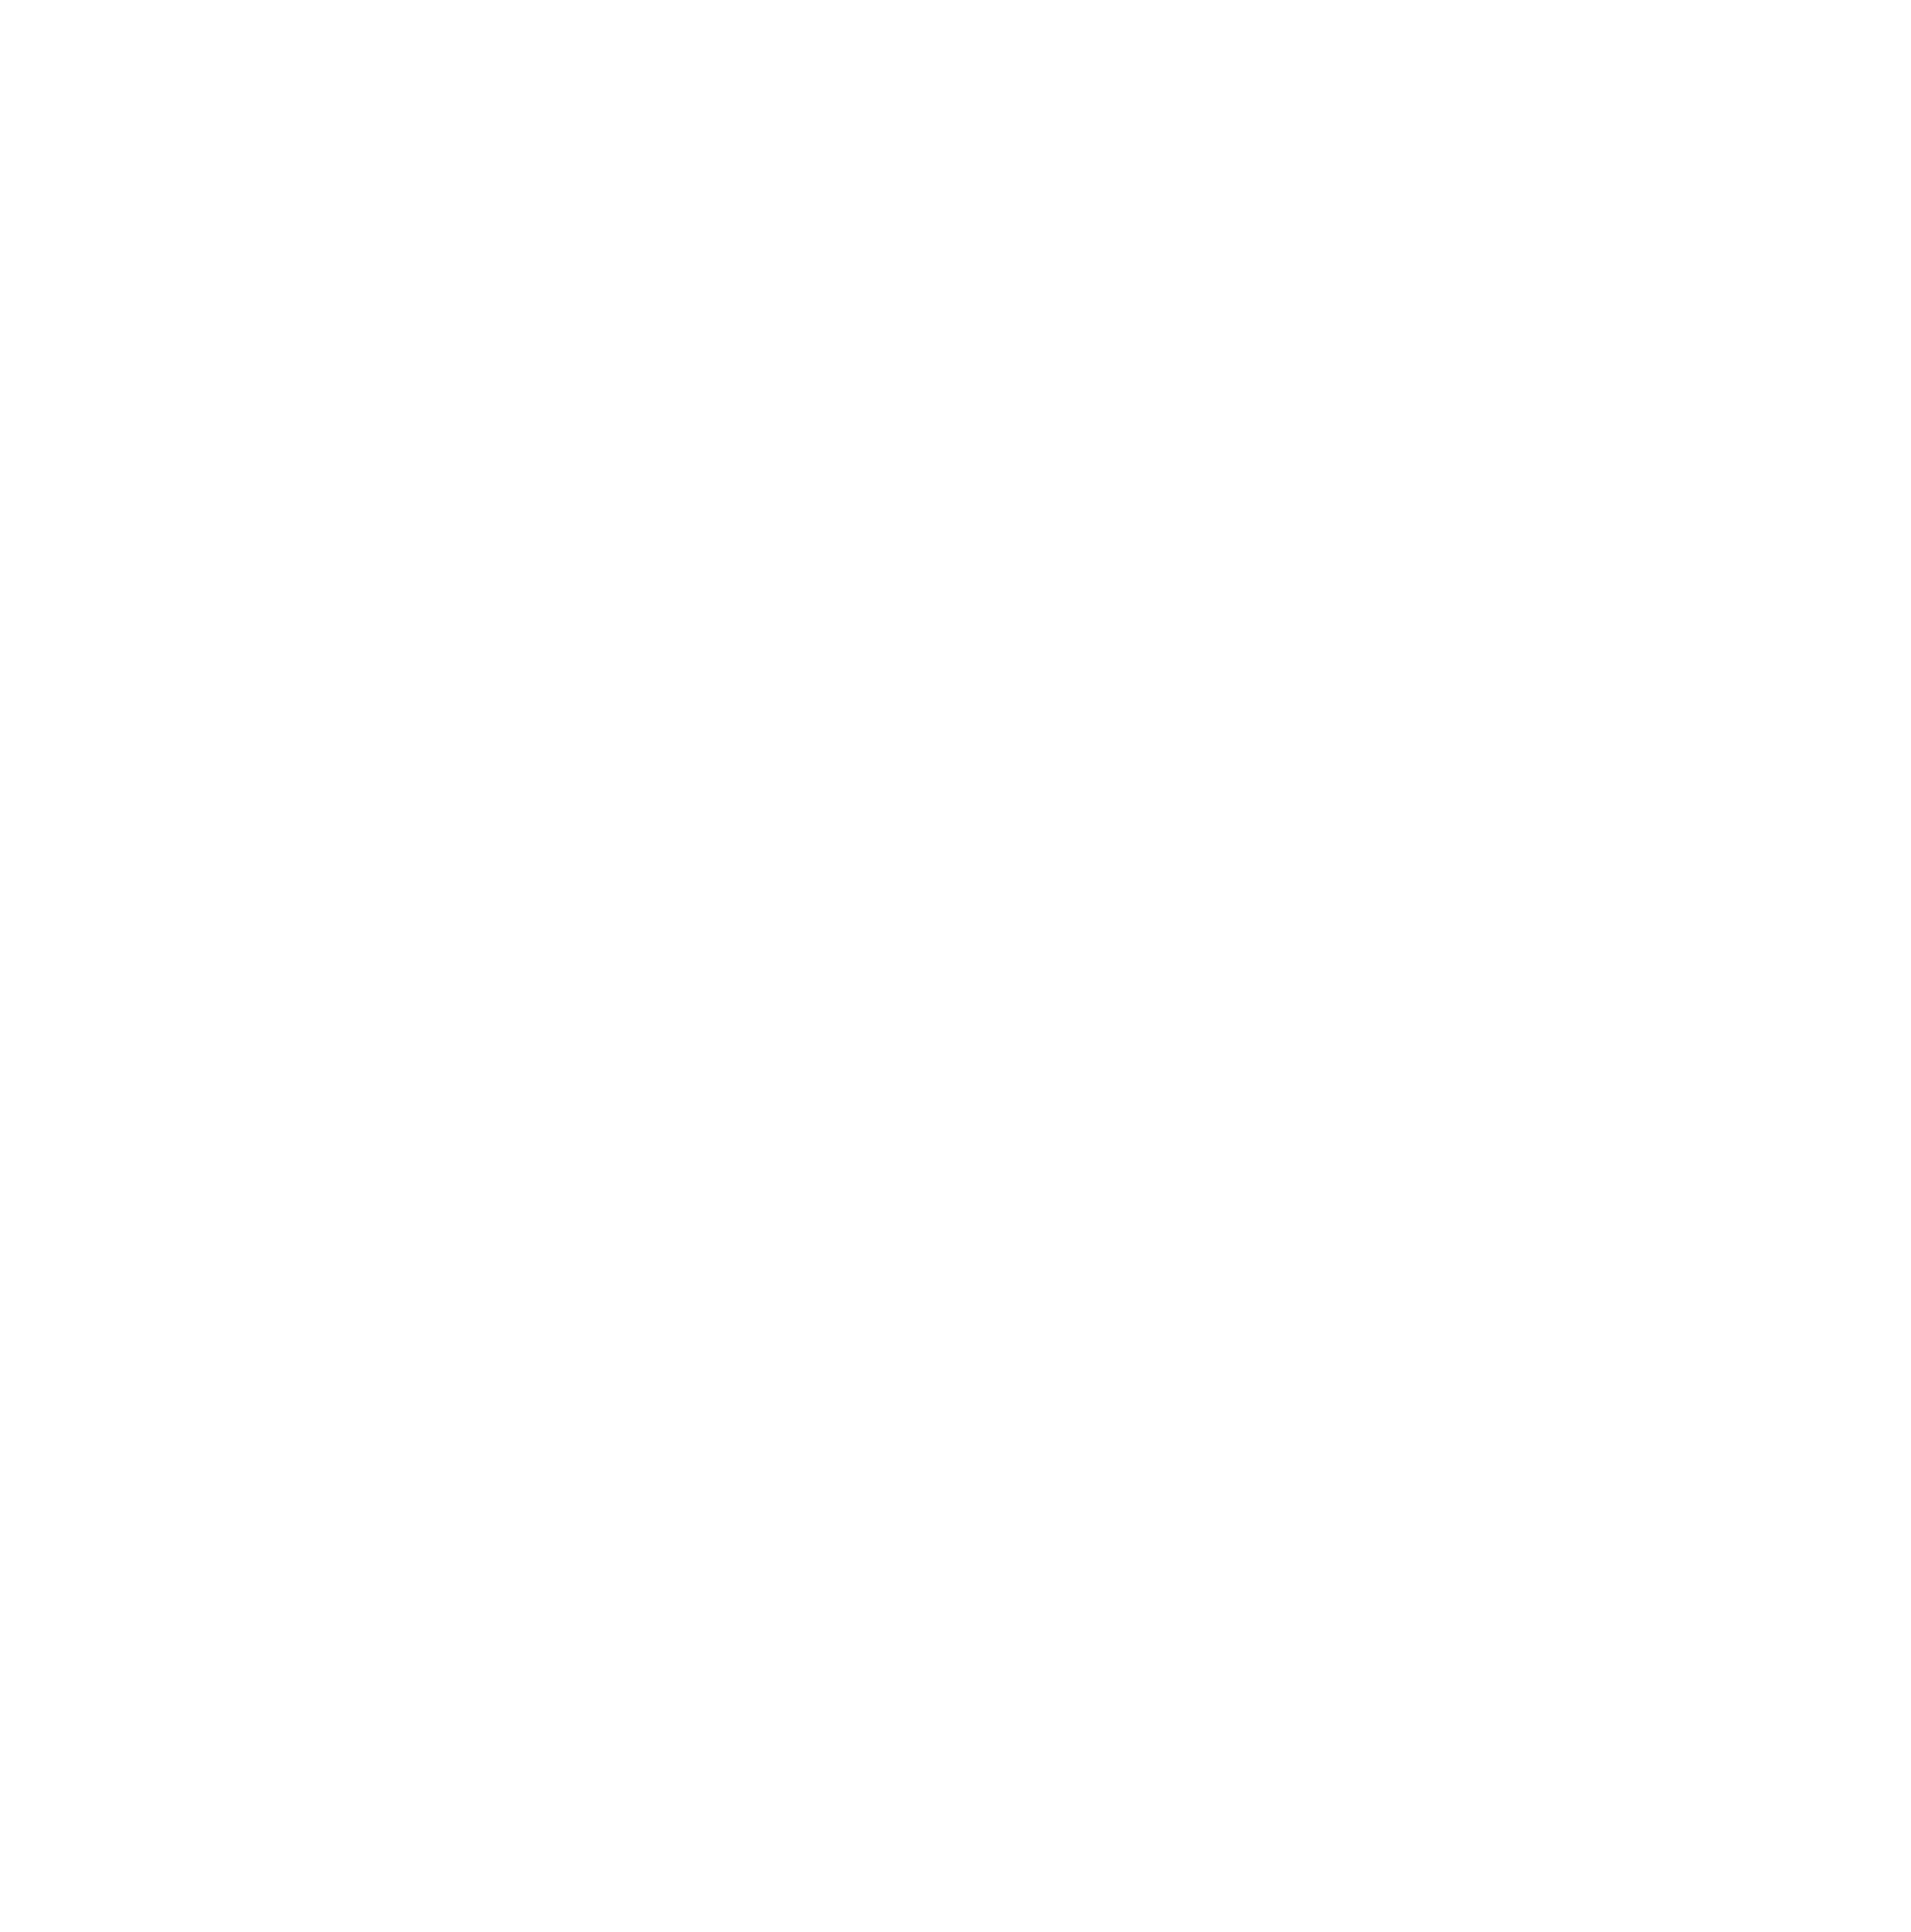 Copy_of_The_Fixer_-_Circle_Logo_-_White_4000